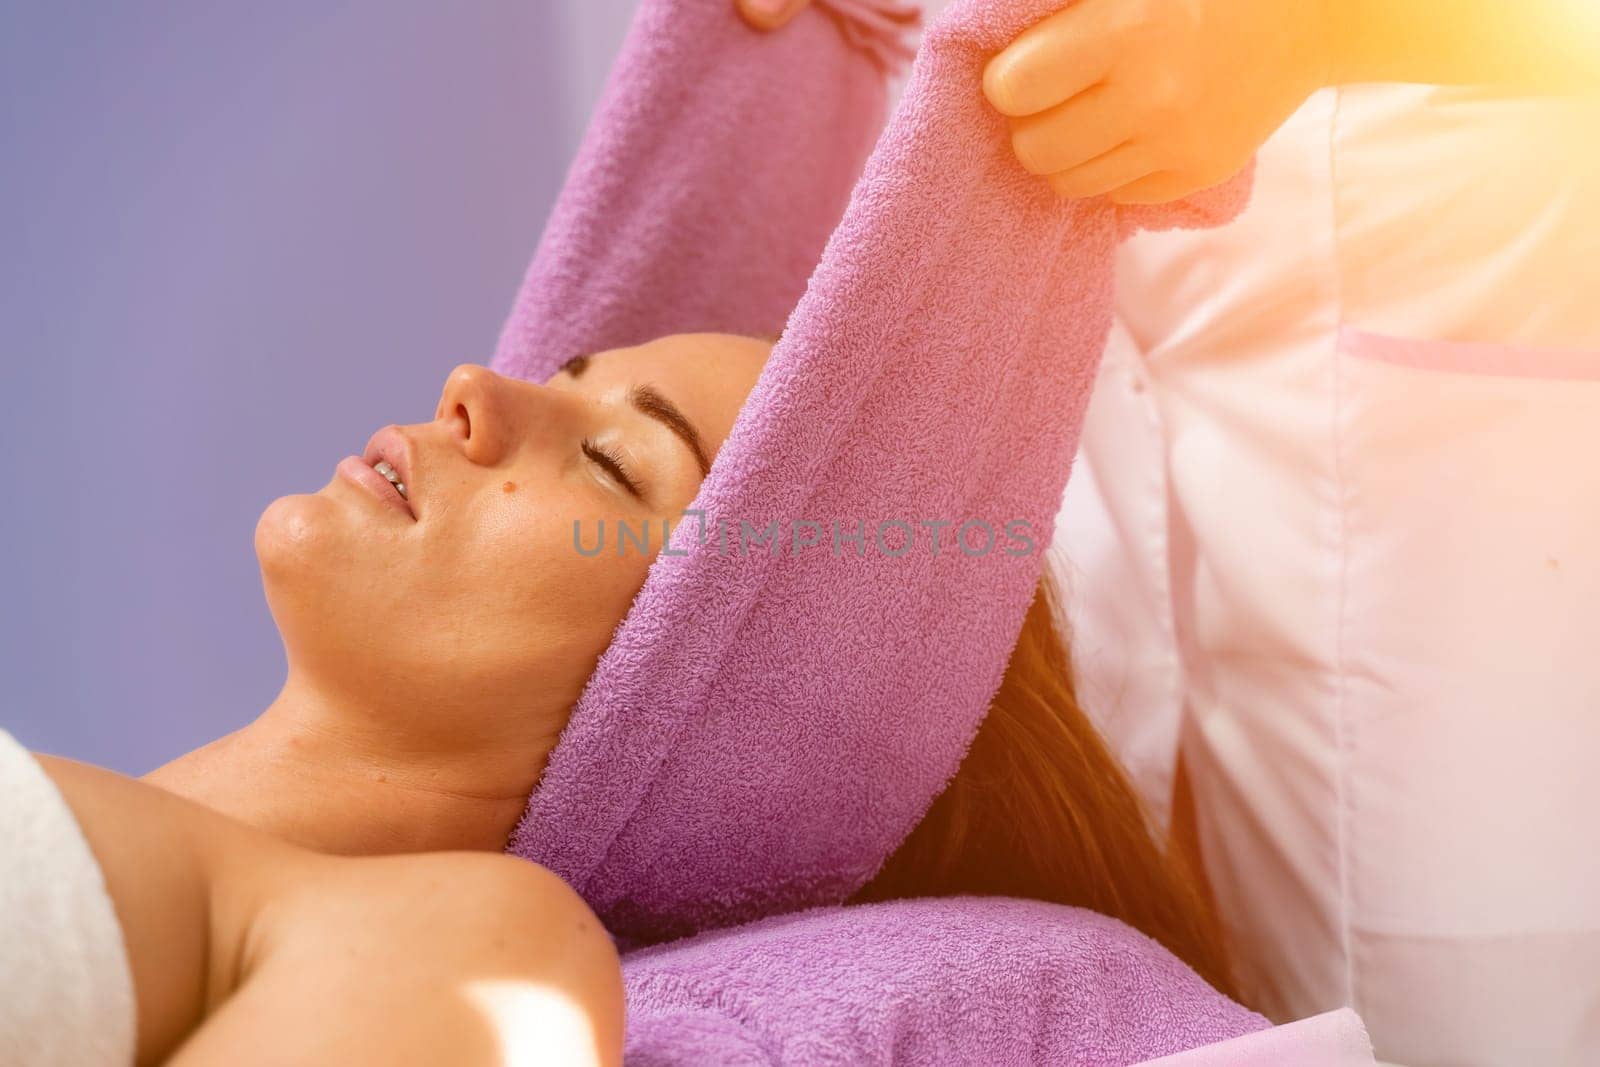 Relaxing massage. European woman getting head massage in spa salon, side view.